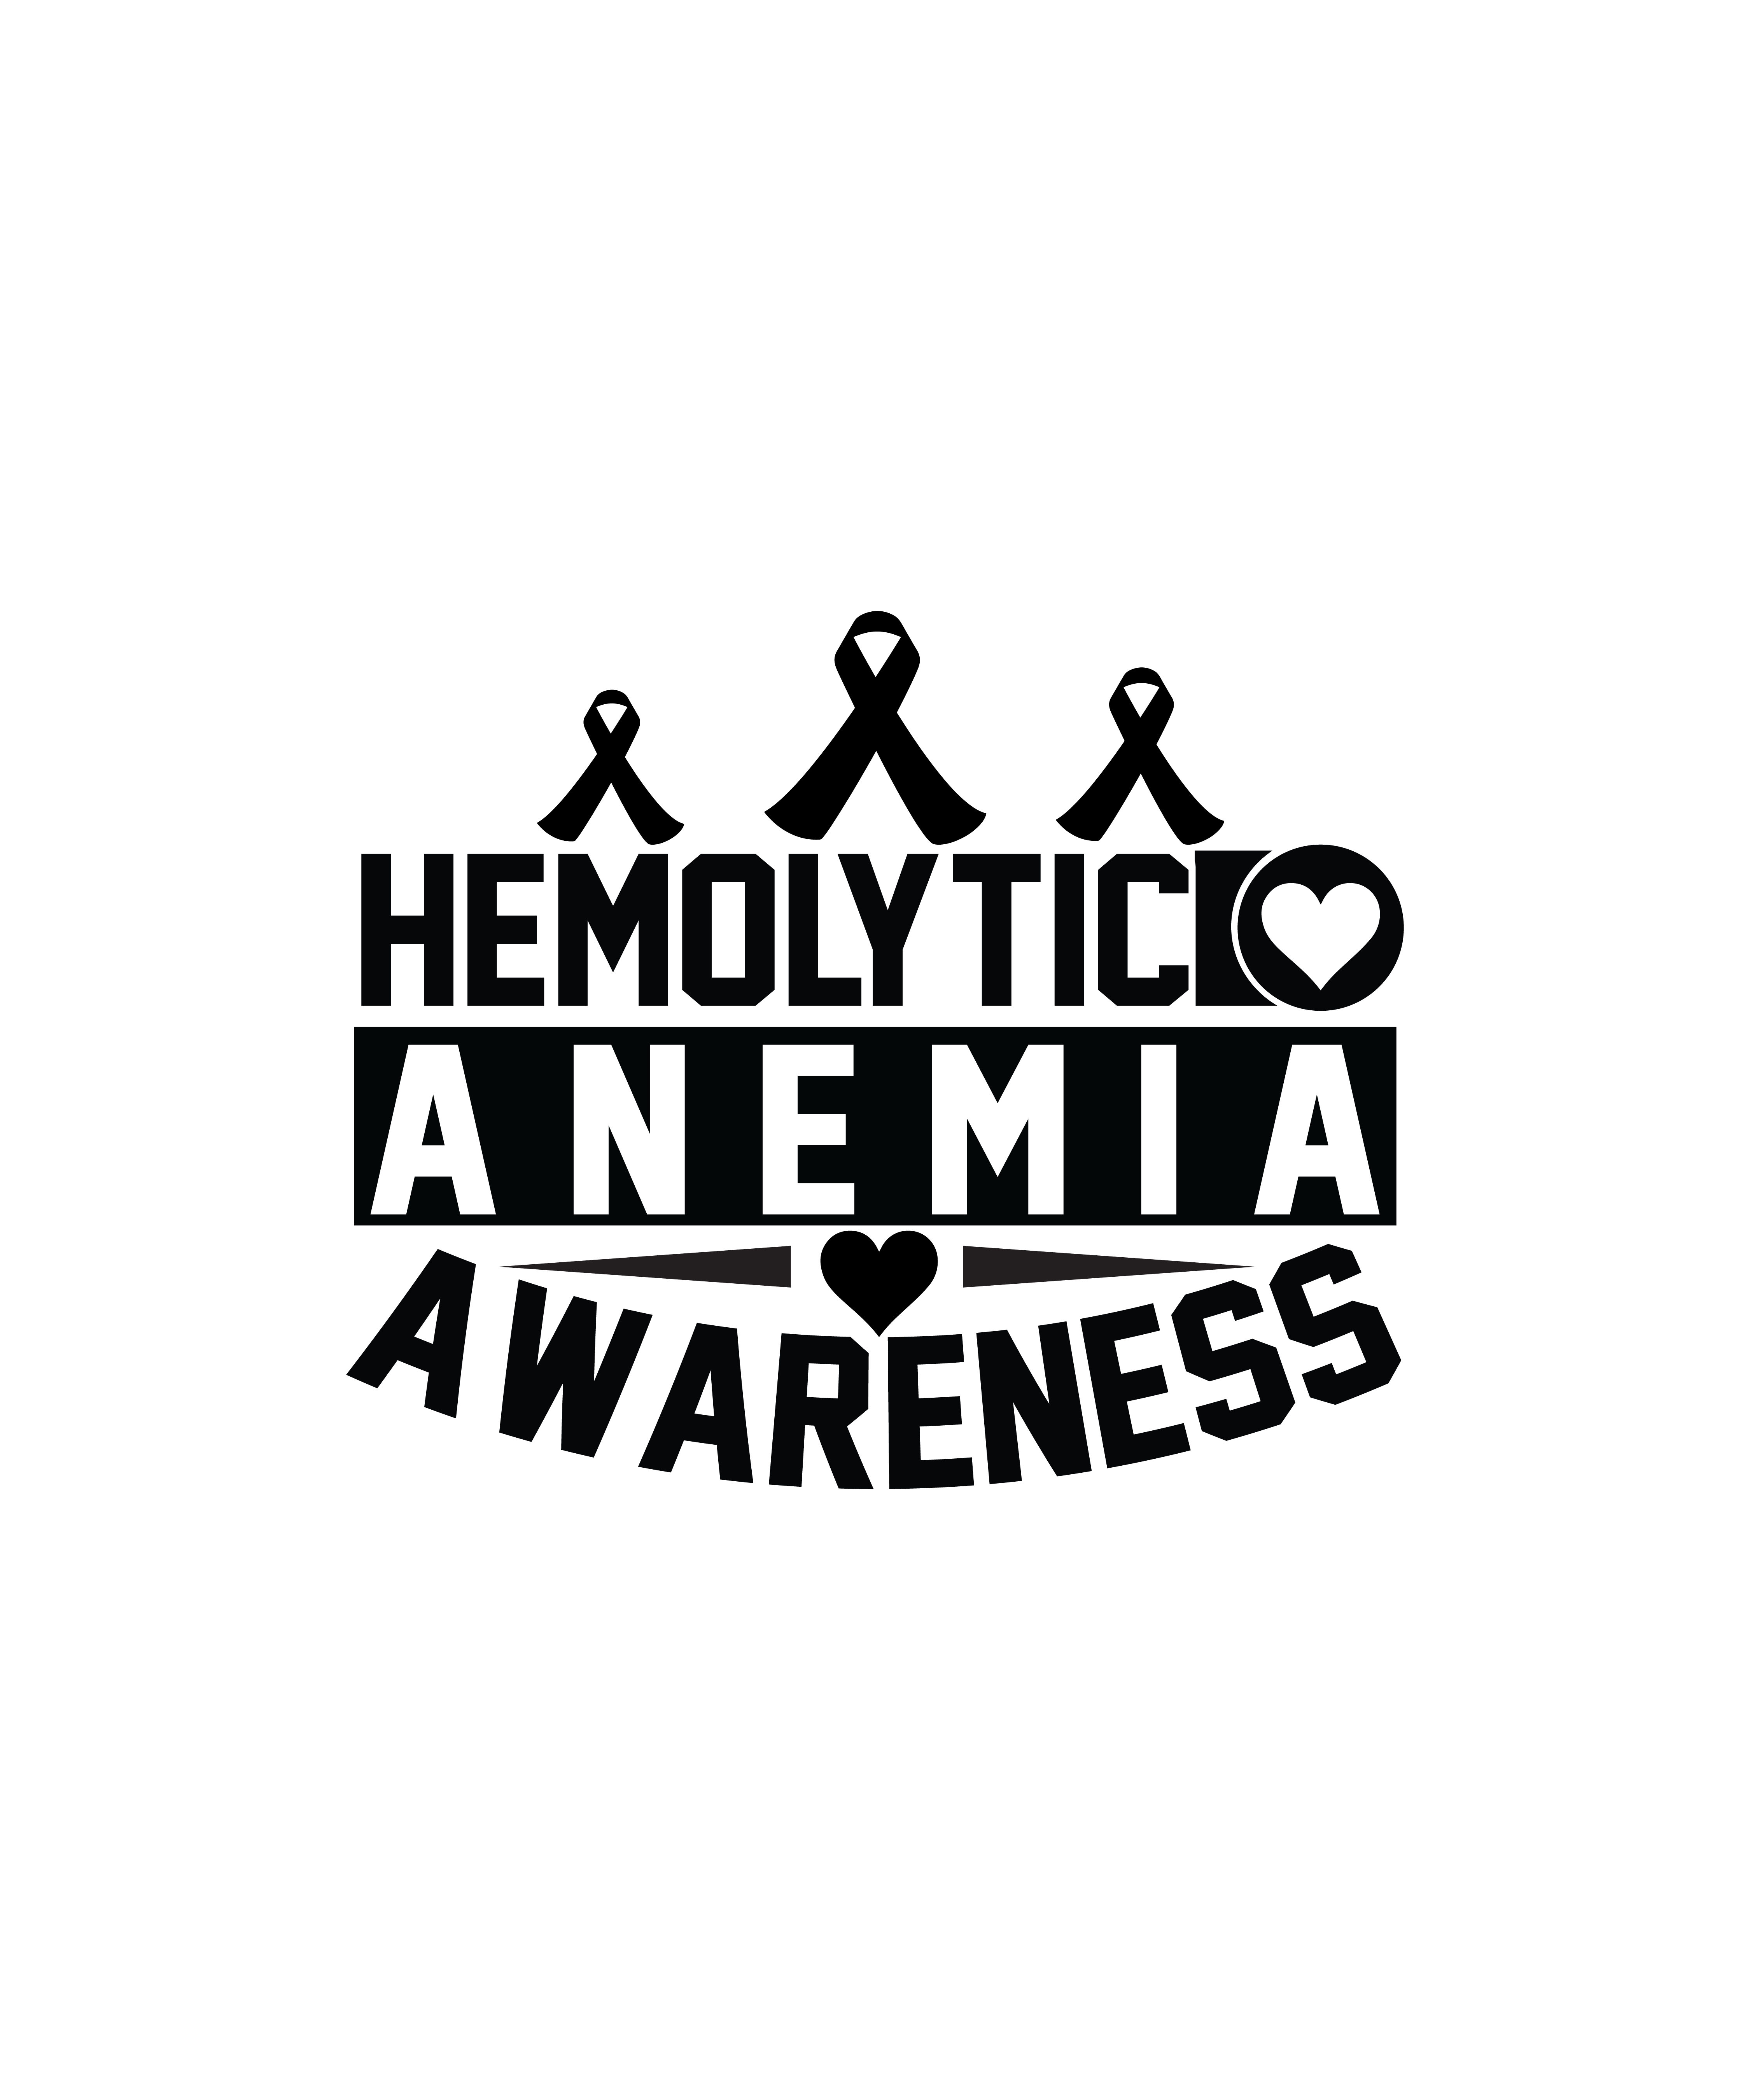 hemolytic anemia awareness 01 109